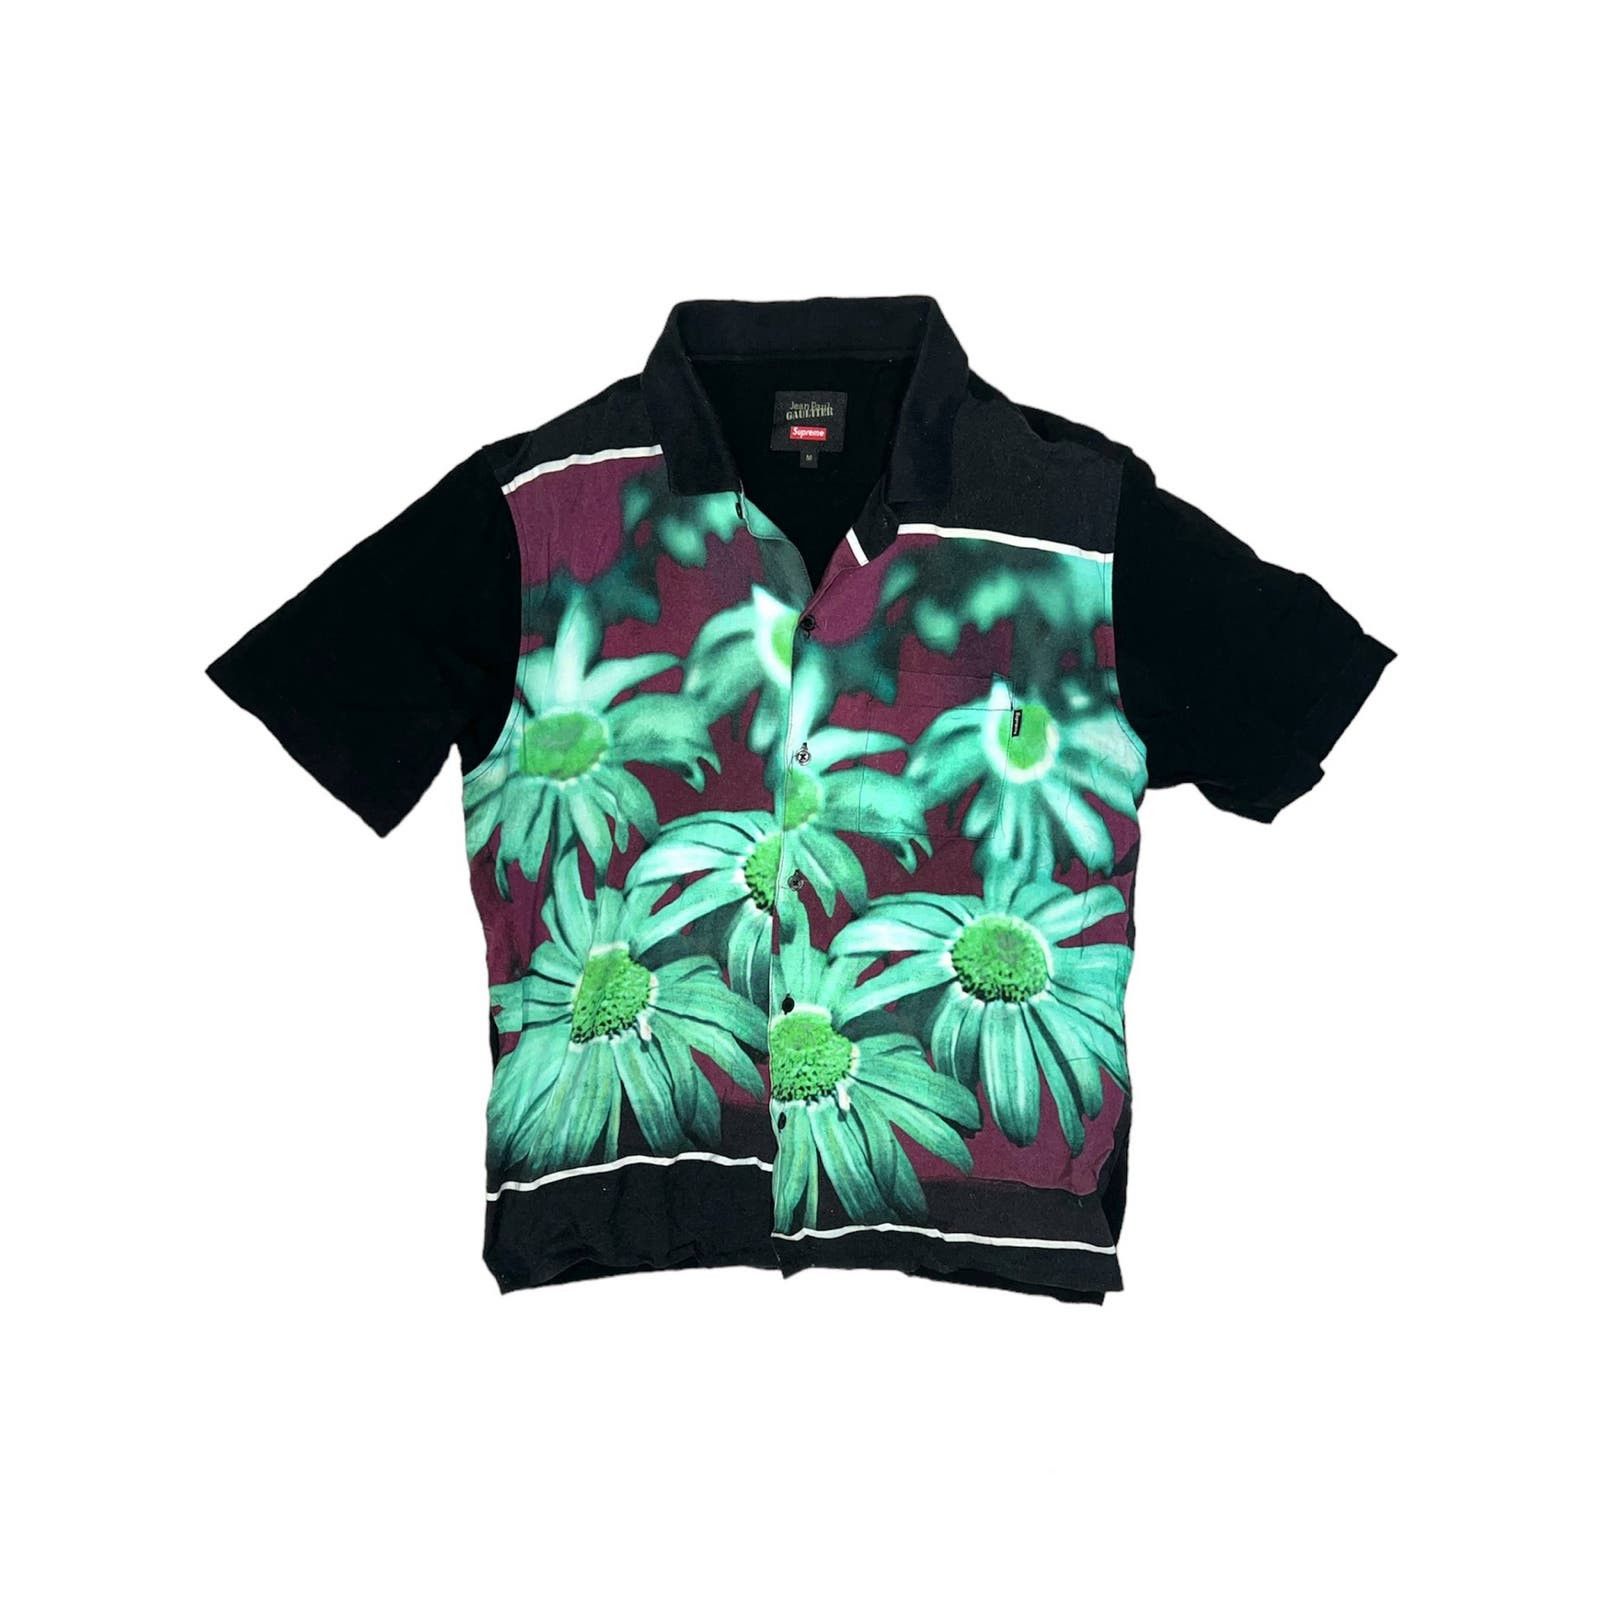 Supreme Supreme Jean Paul Gaultier Flower Power Rayon Shirt | Grailed